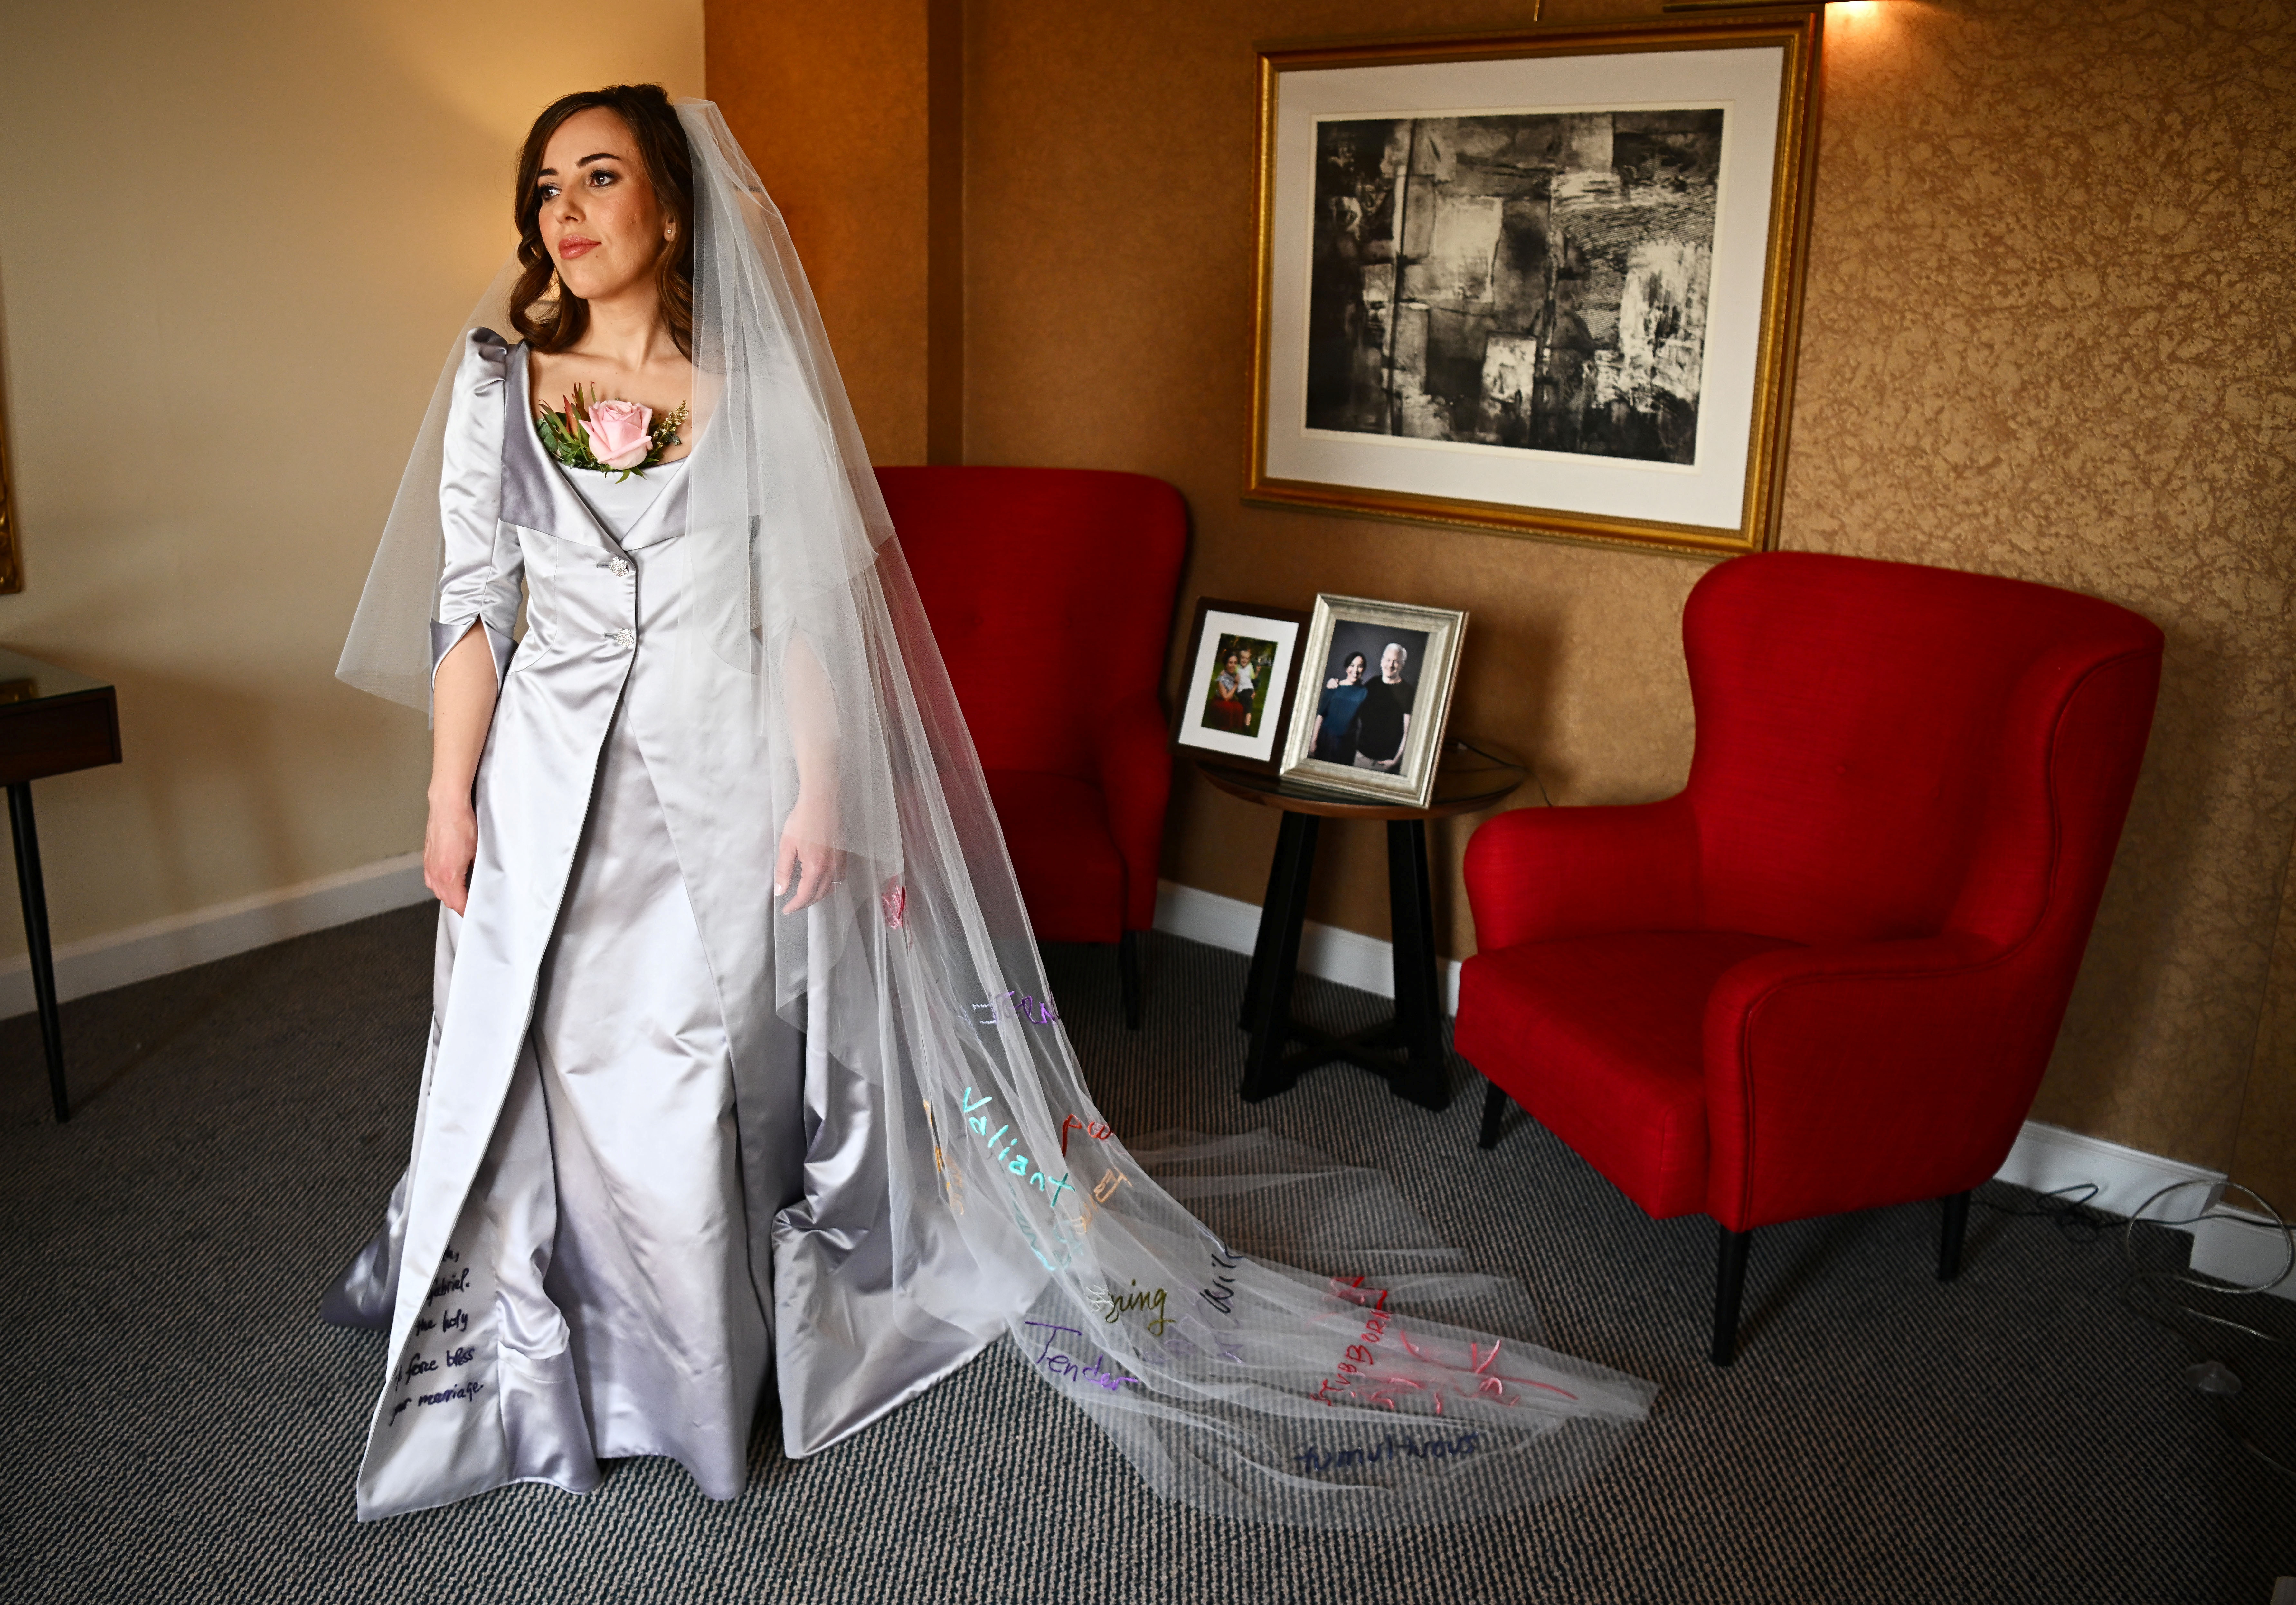 Stella Moris, the partner of Wikileaks founder Julian Assange, is photographed in her Vivienne Westwood designed wedding dress in London